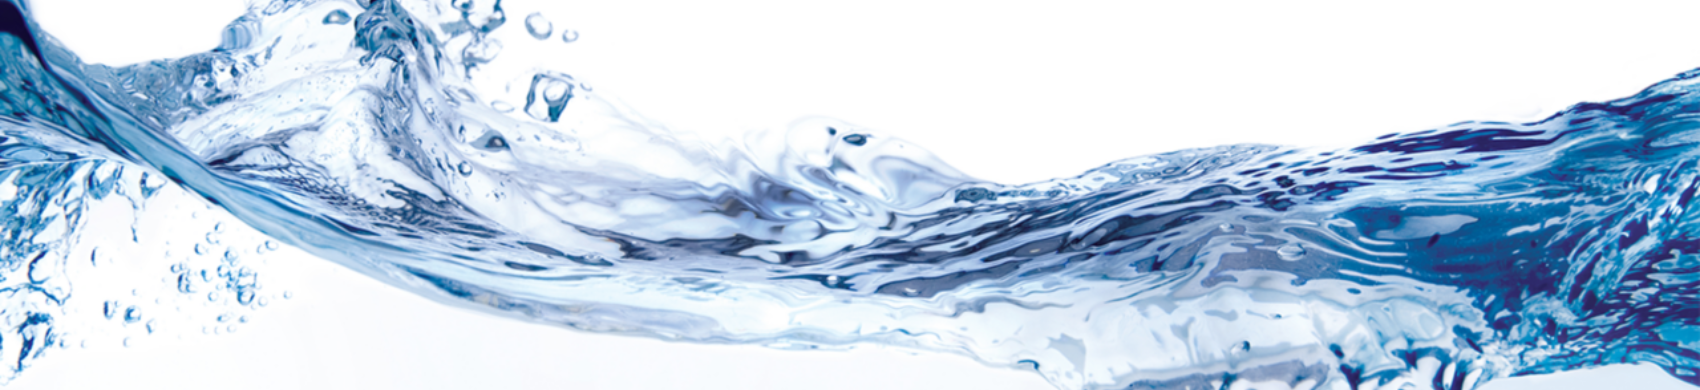 Hardness Reducing Water Filters - Vita Filters